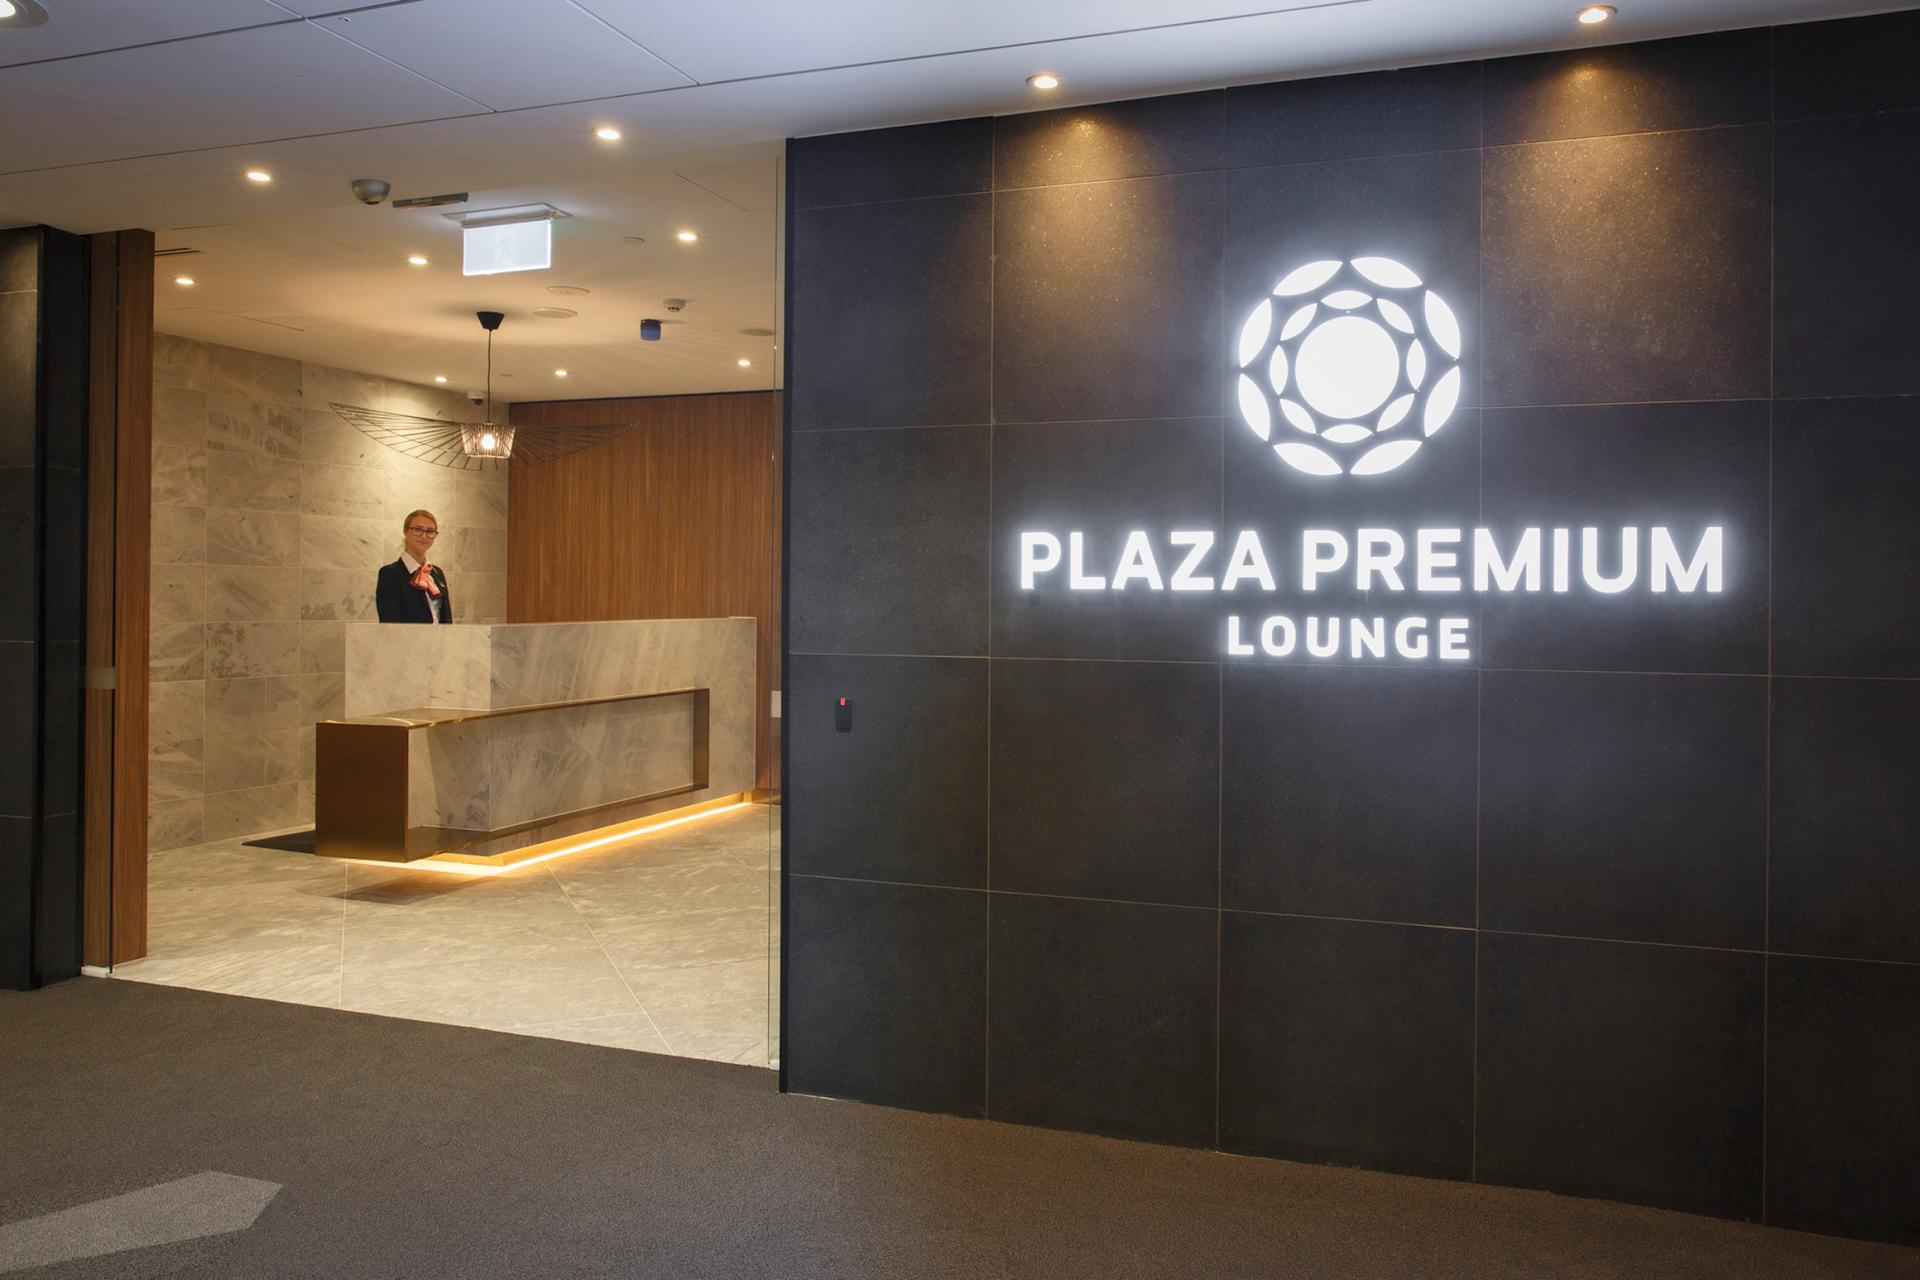 Plaza Premium Lounge image 32 of 33